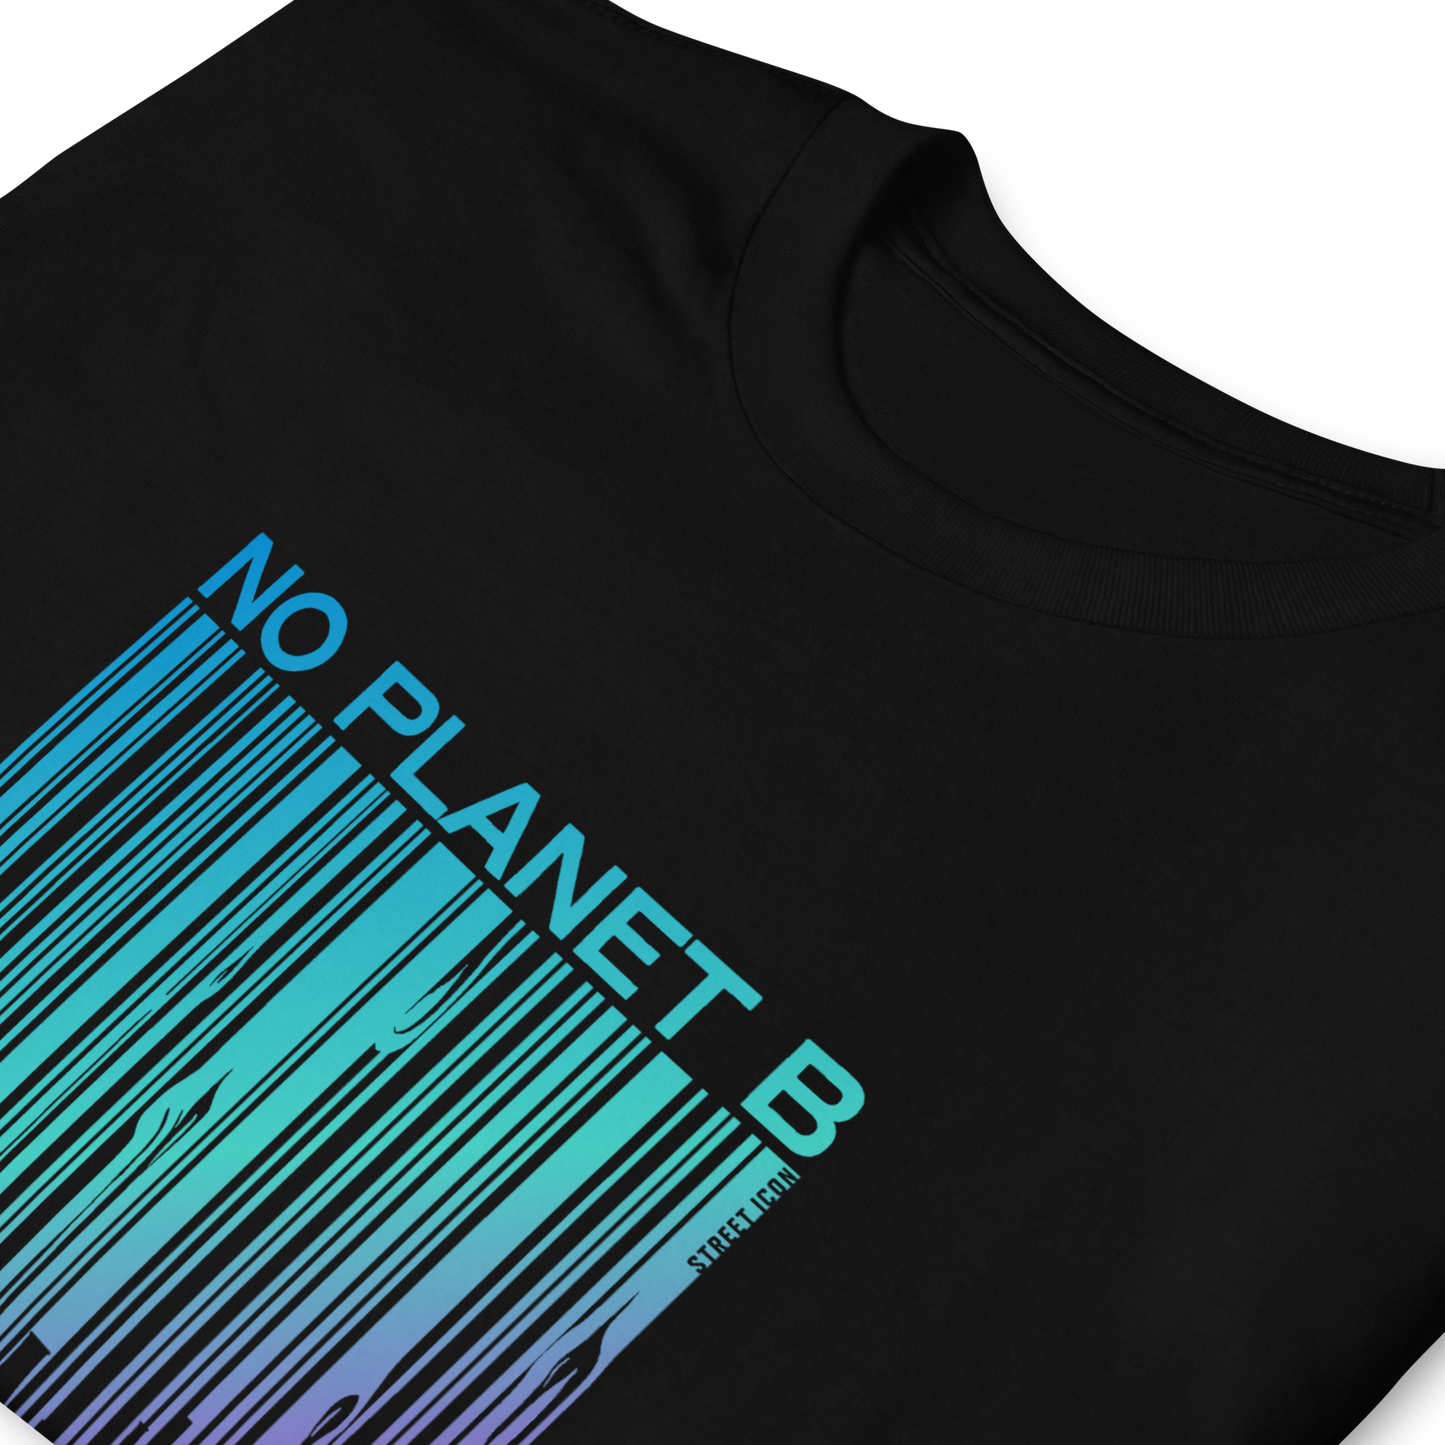 No Planet B | Color Code - T-Shirt